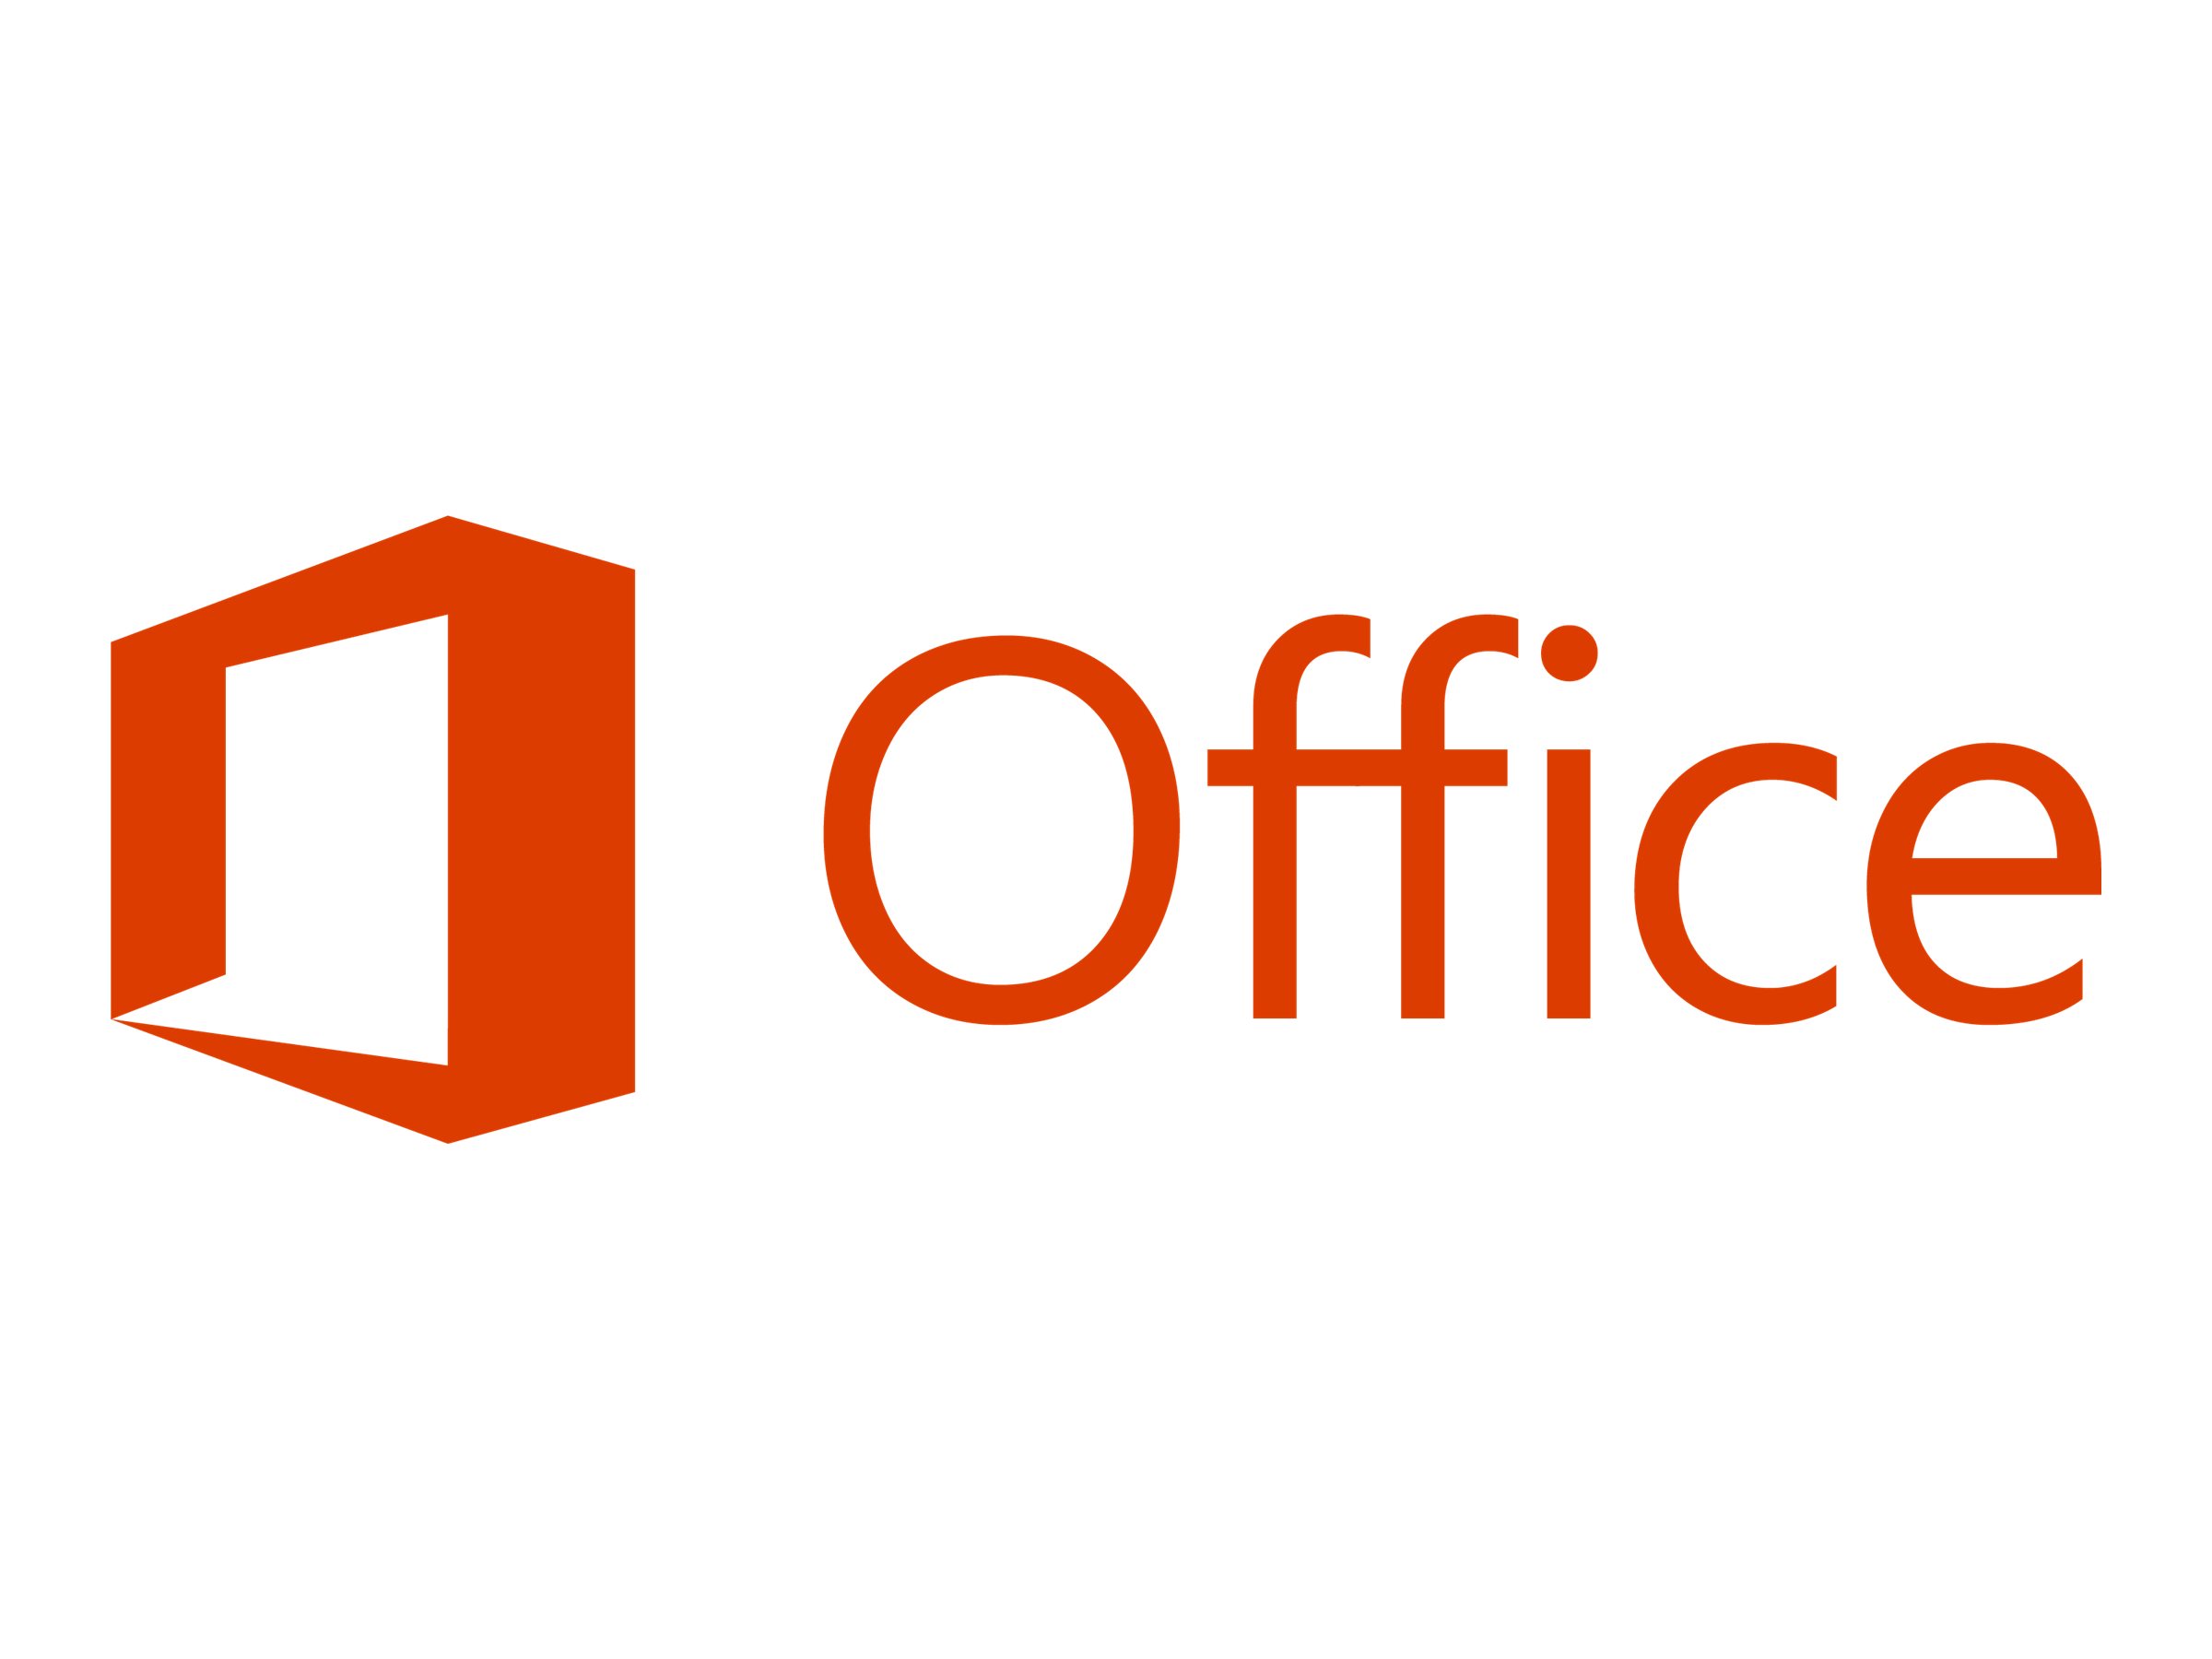 Microsoft Office Multi-Language Pack 2013